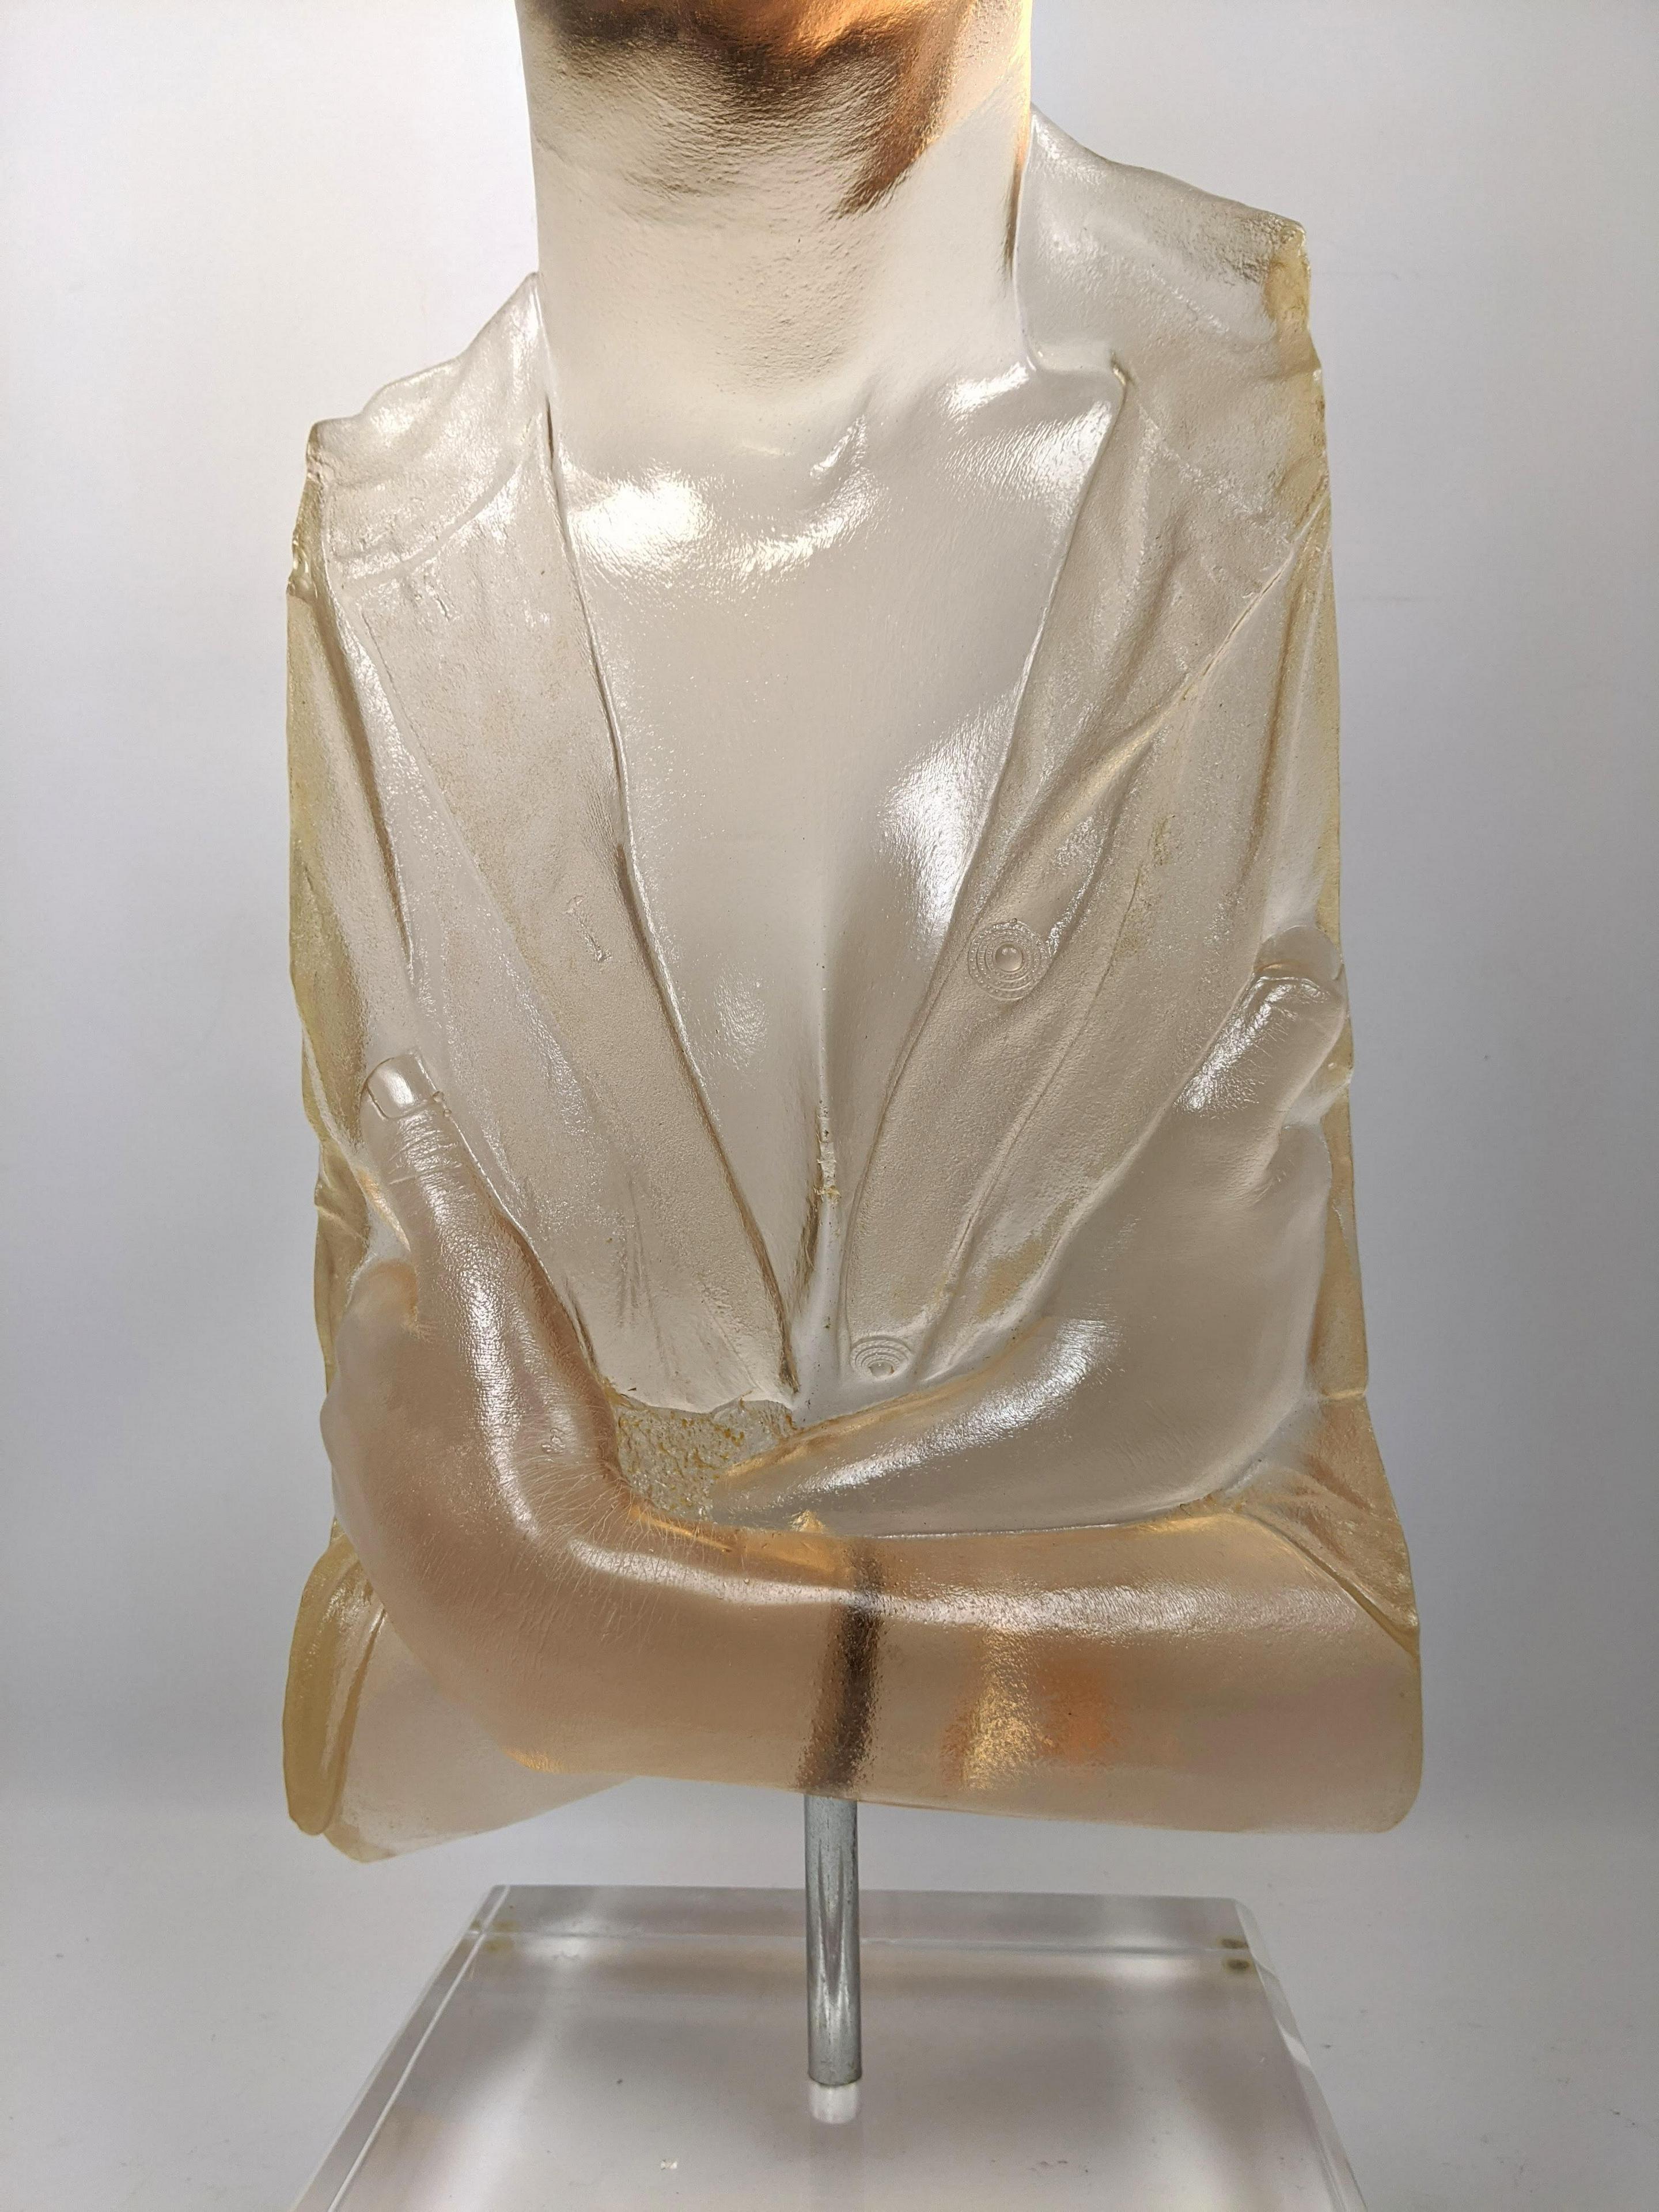 Marc Sijan Hyper Realist Contemporary Cast Acrylic Resin Sculpture Portrait Bust For Sale 3